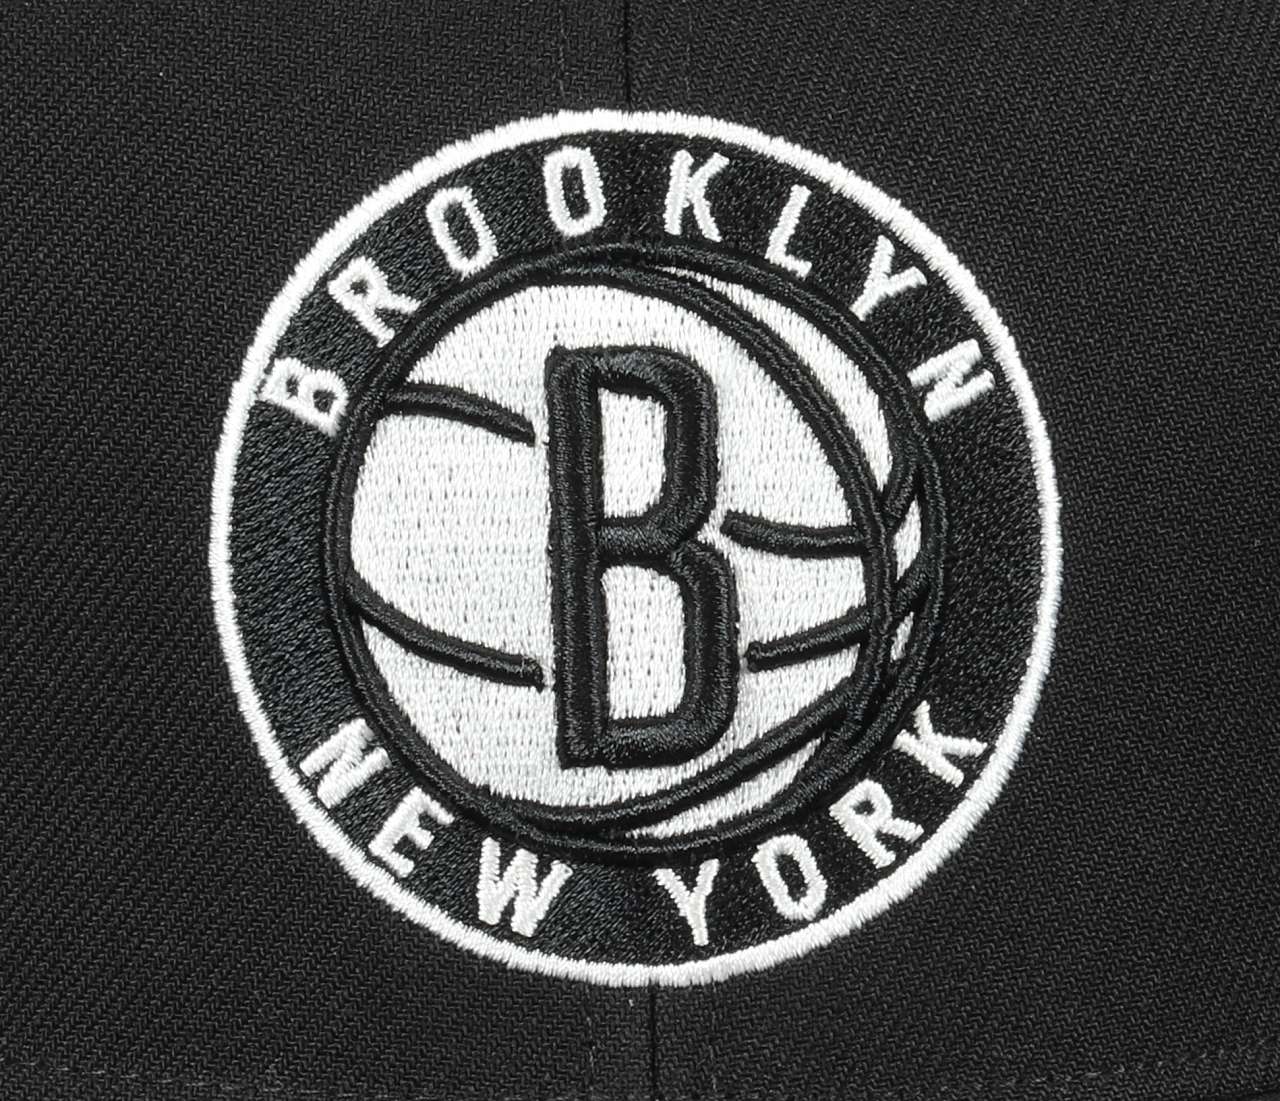 Brooklyn Nets NBA Conference Patch Black Original Fit Snapback Cap Mitchell & Ness